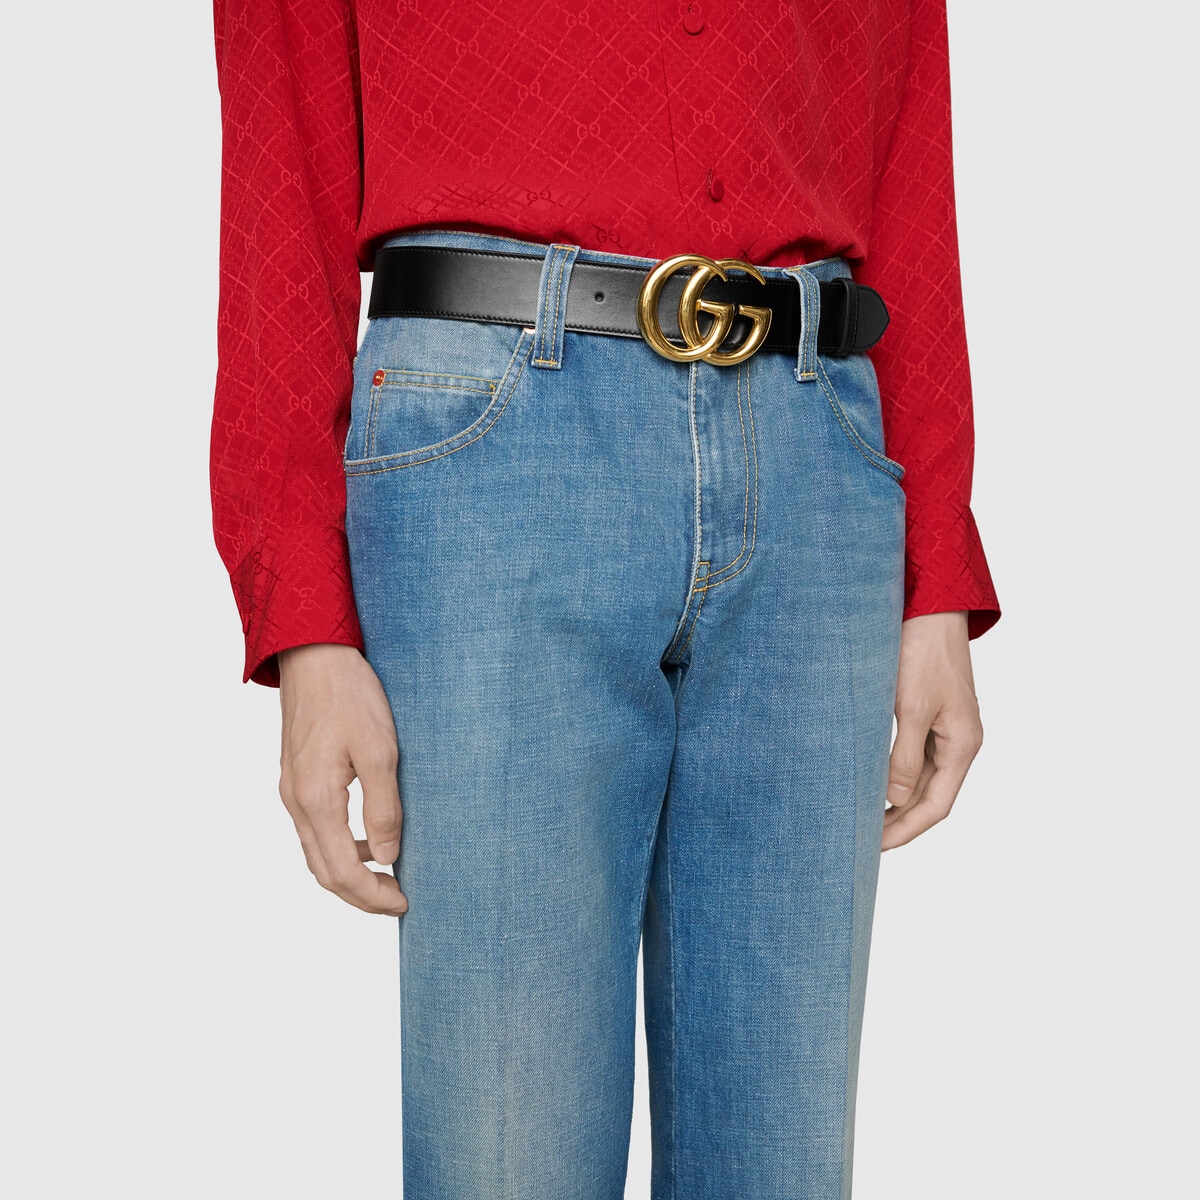 Gucci Leather GG Marmont Slim Belt - Size 26 / 65 (SHF-21034